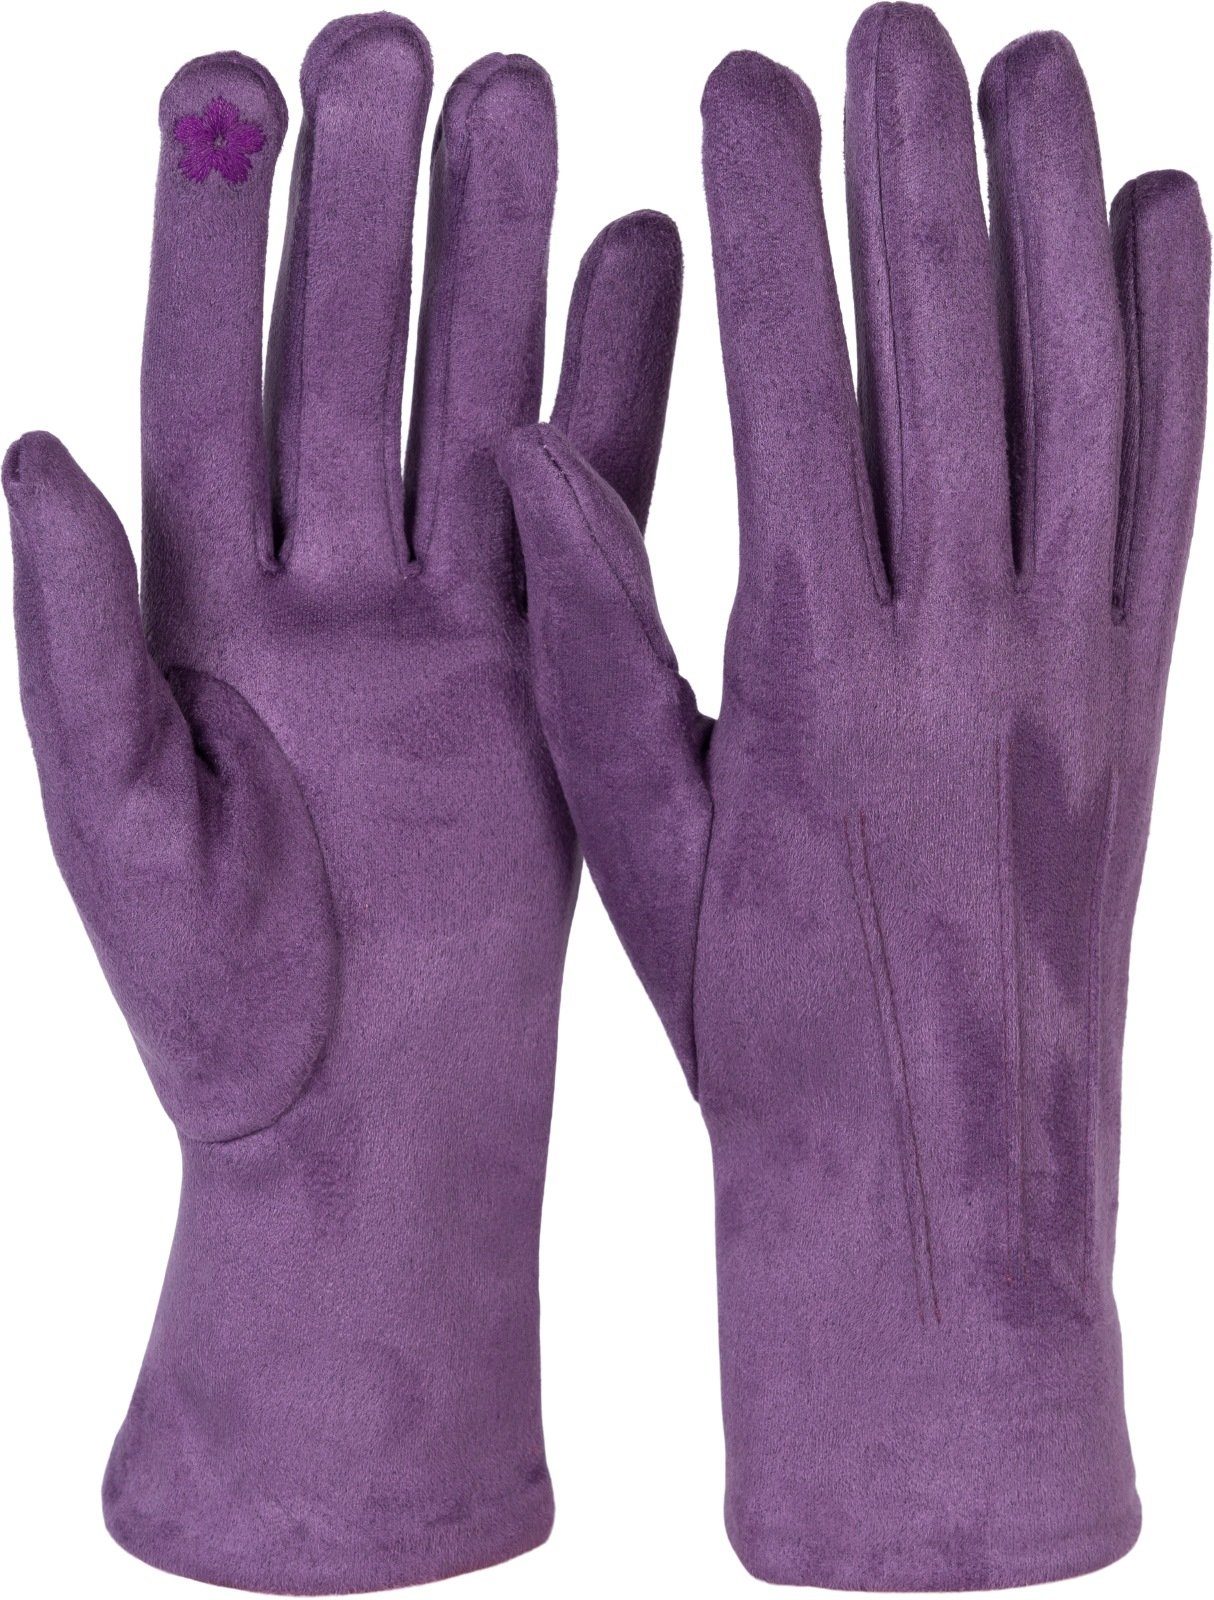 Violett Touchscreen Ziernähte Fleecehandschuhe Einfarbige Handschuhe styleBREAKER